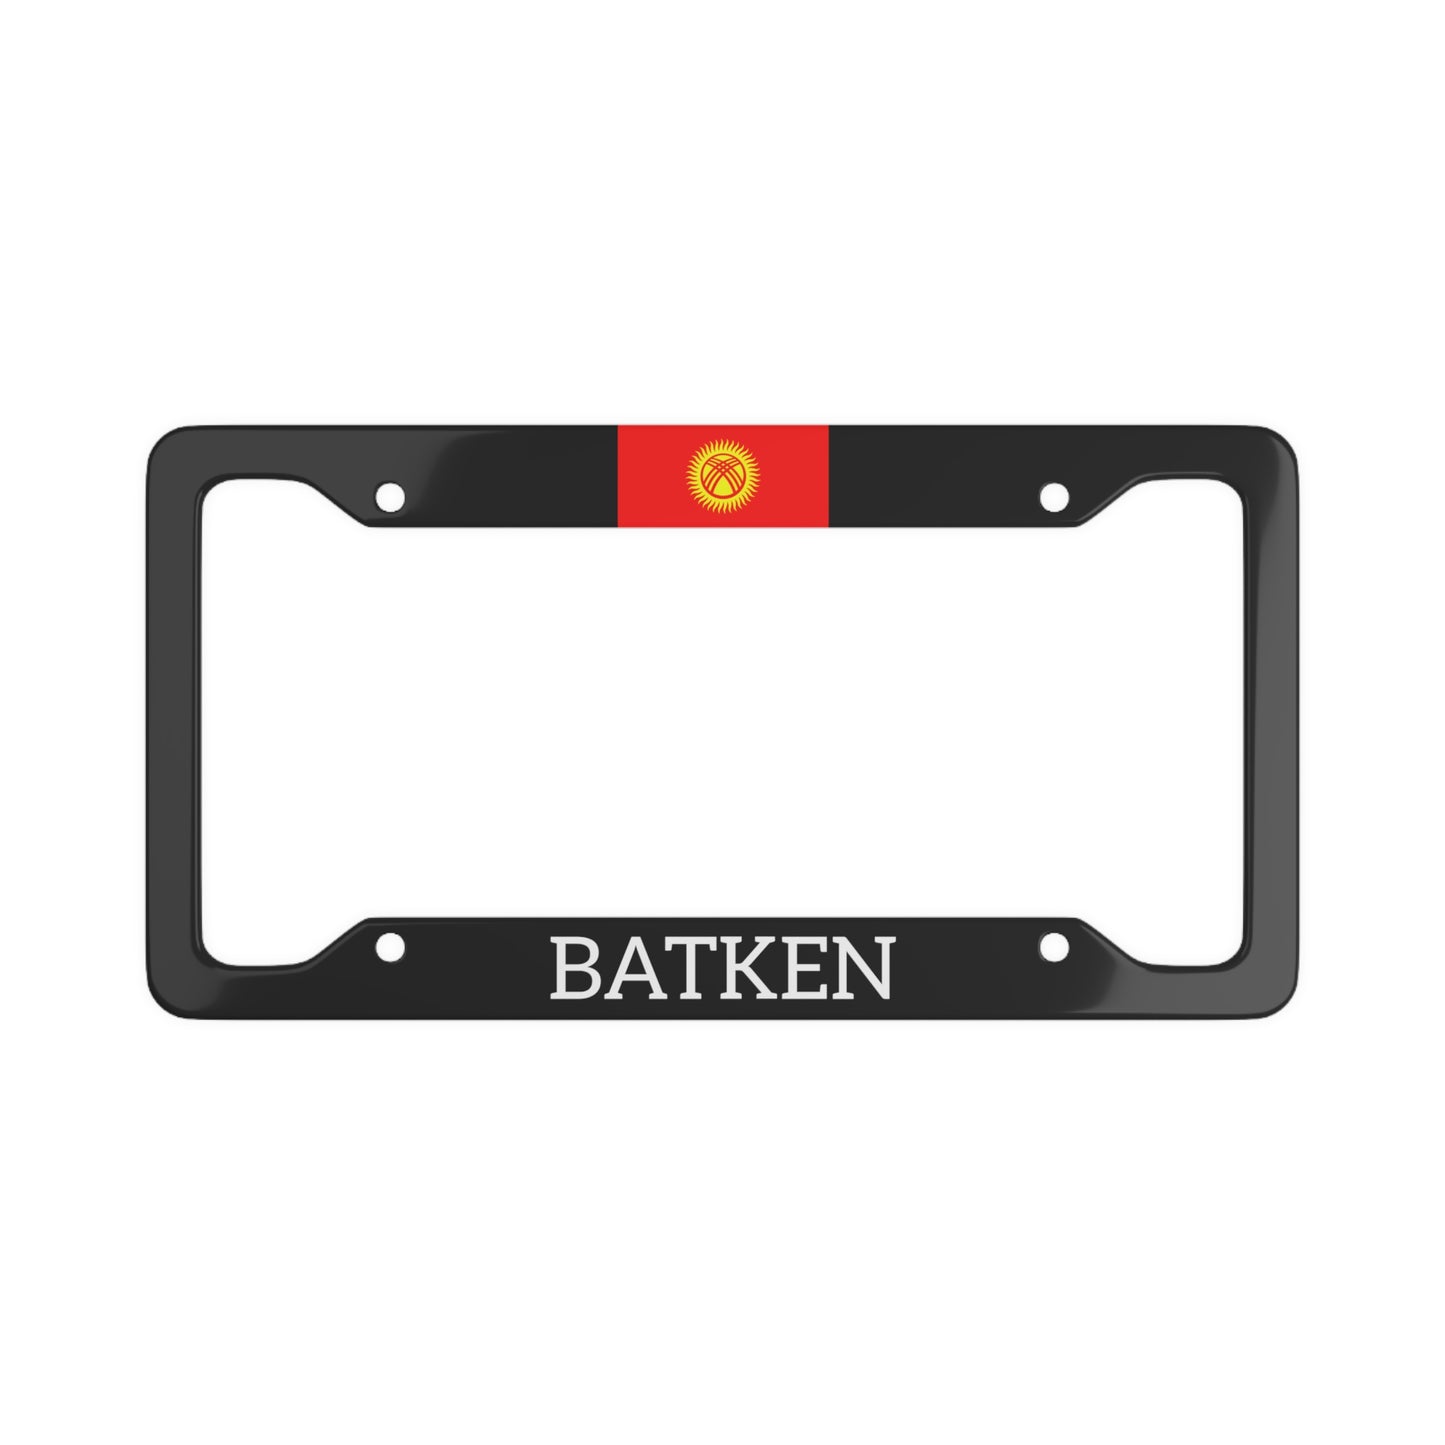 BATKEN with flag License Plate Frame